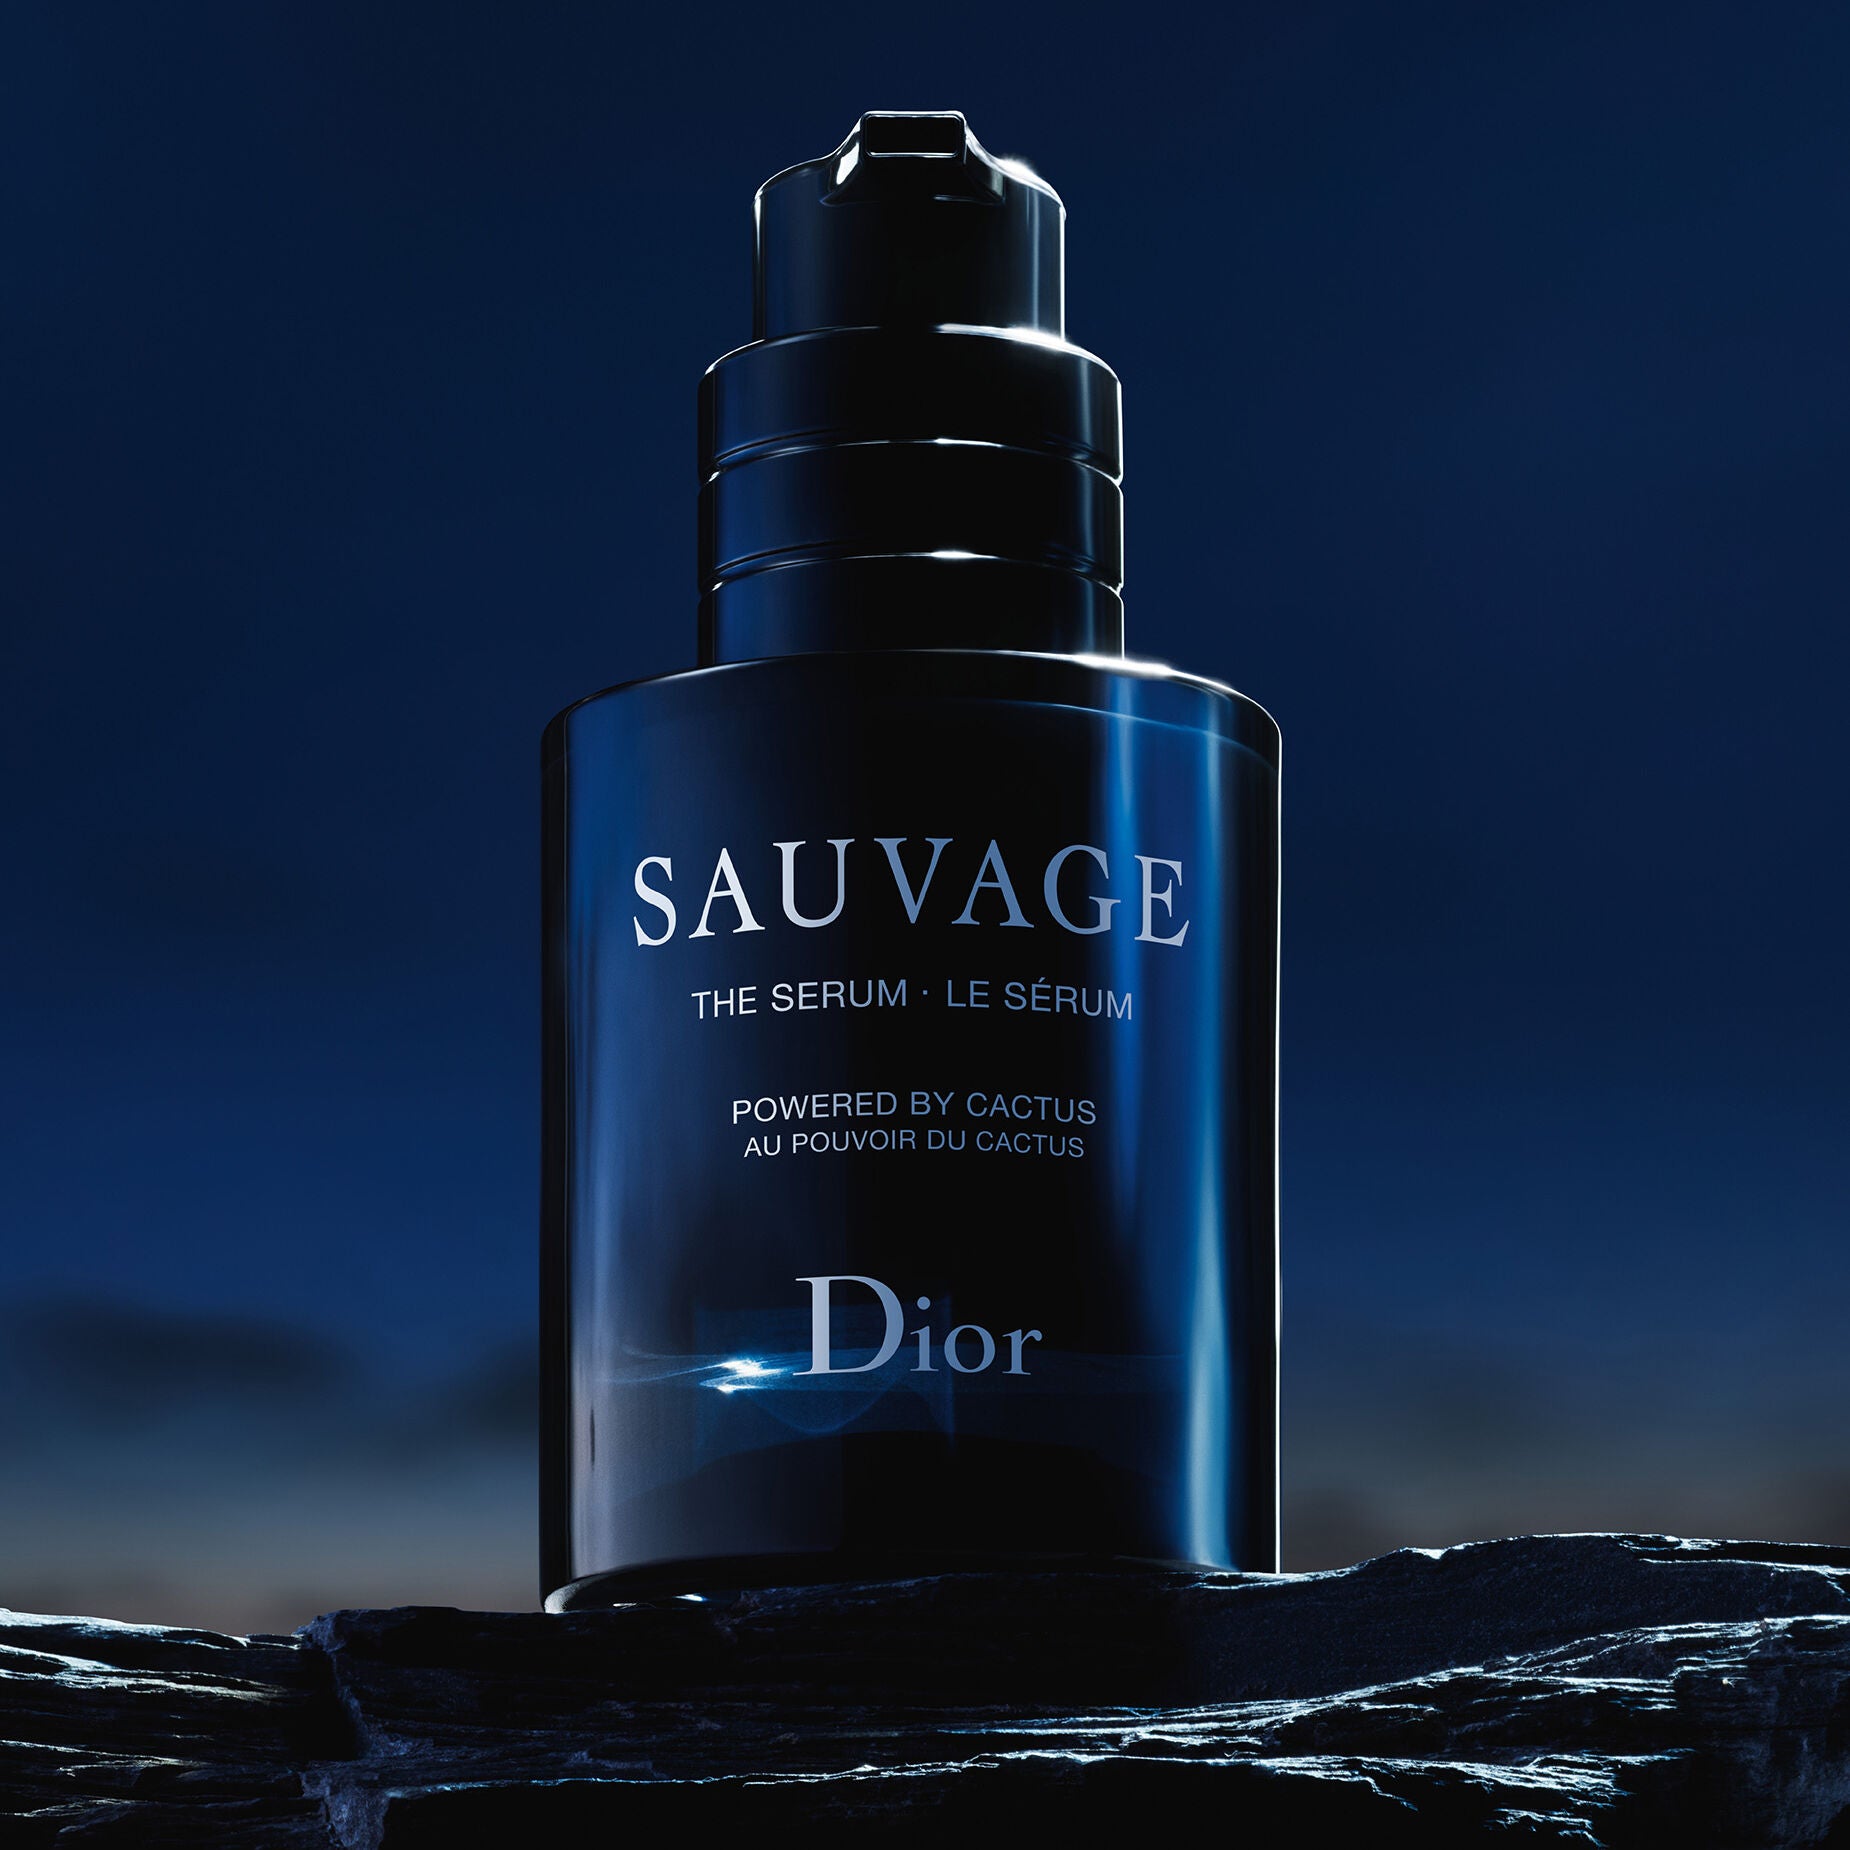 Tinh Chất Dưỡng Dior Sauvage The Serum